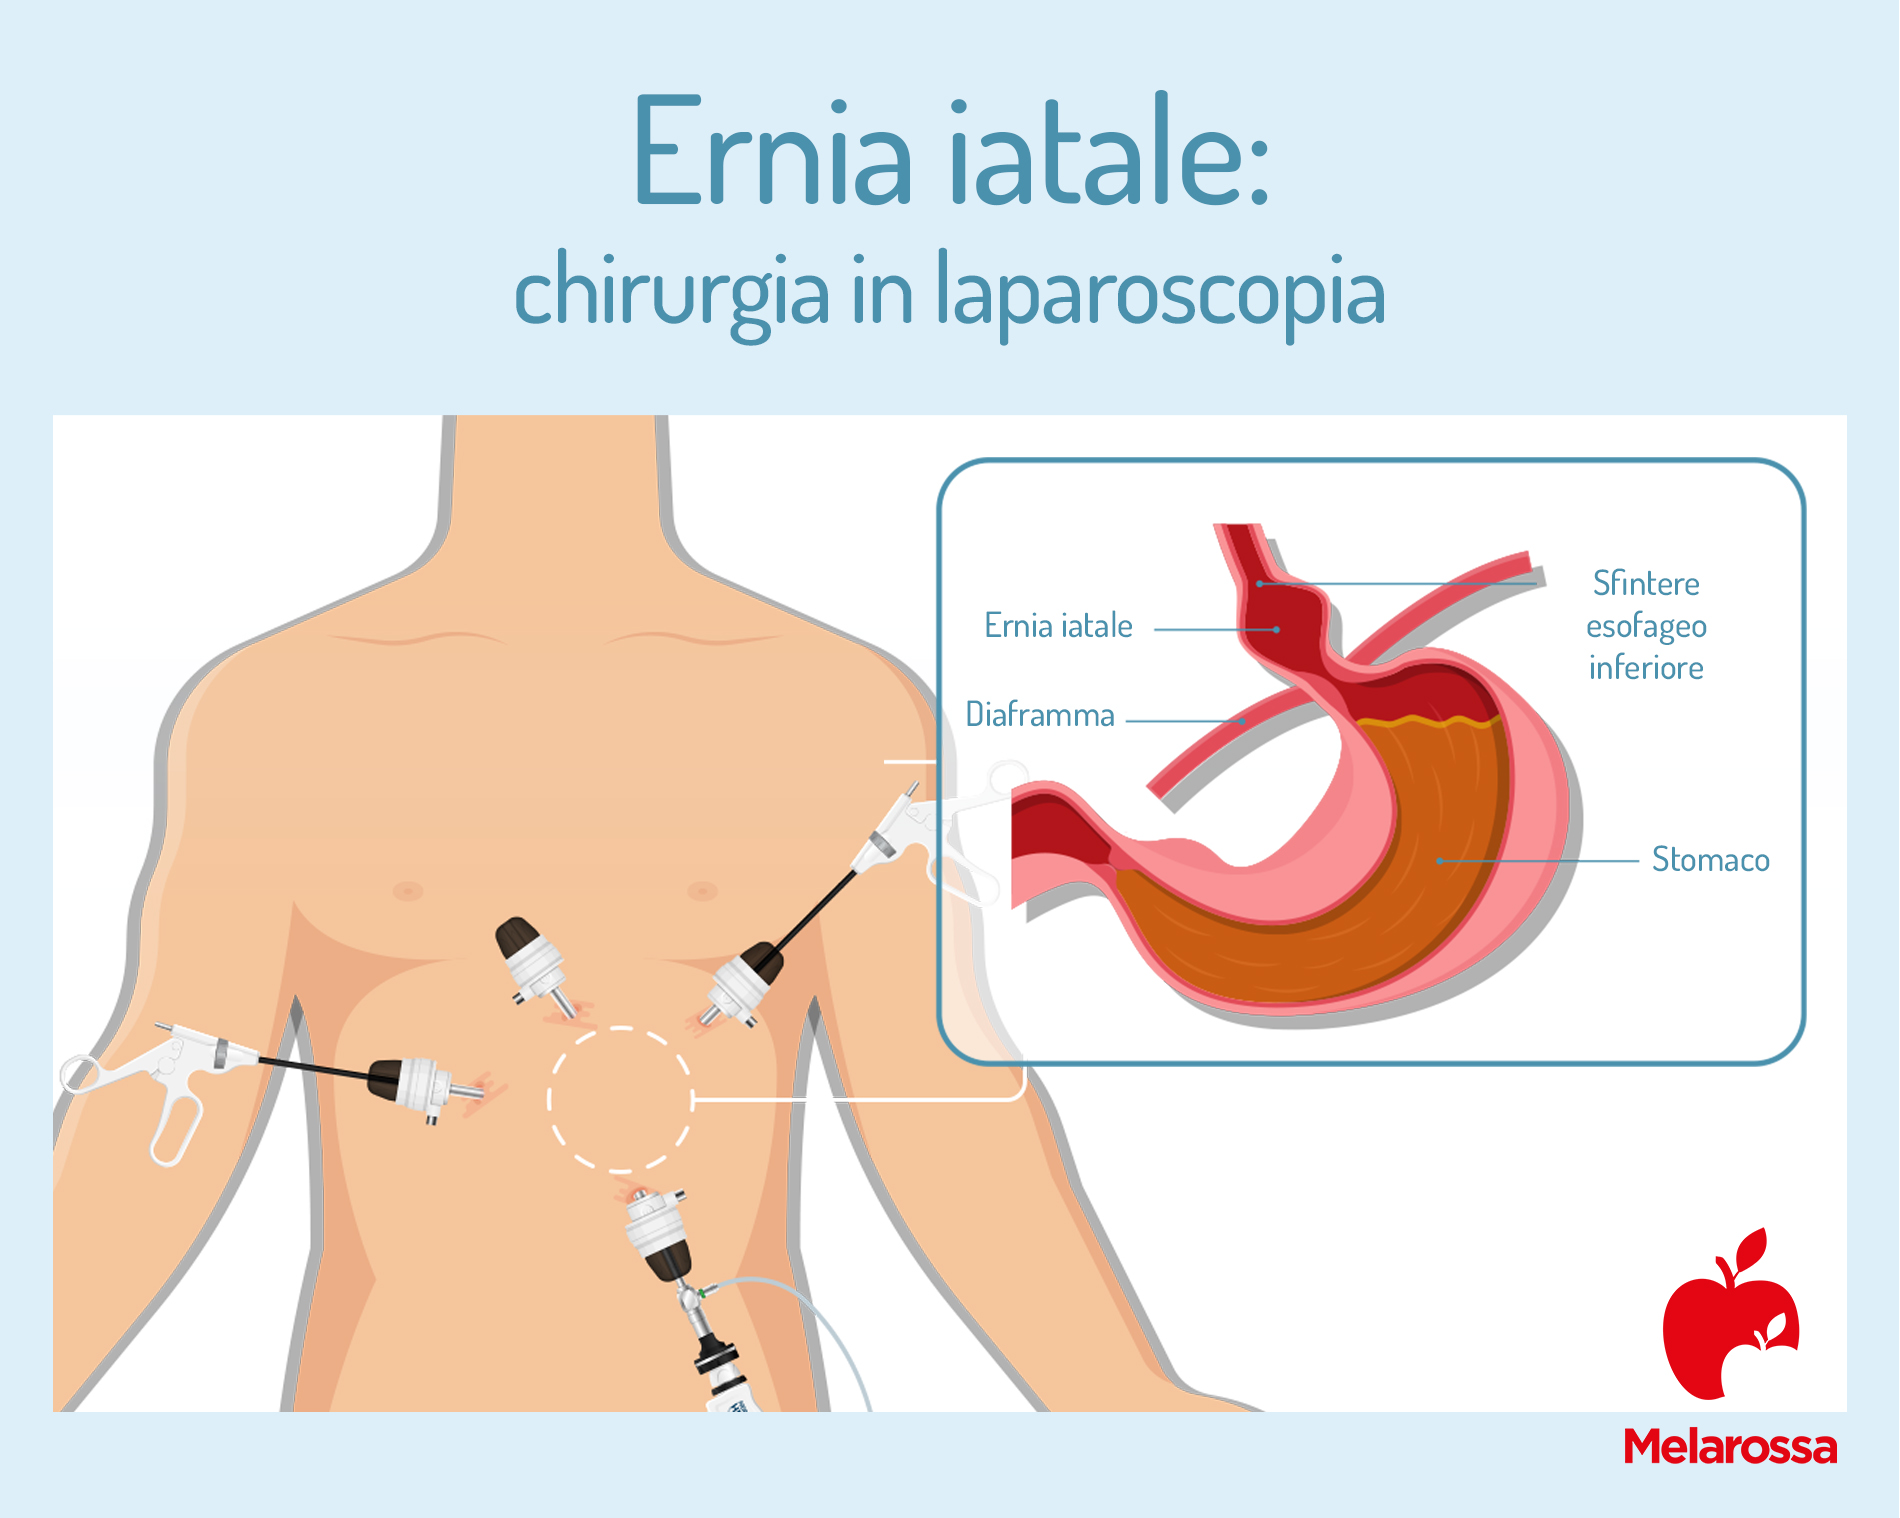 Ernia iatale: chirurgia in laparoscopia